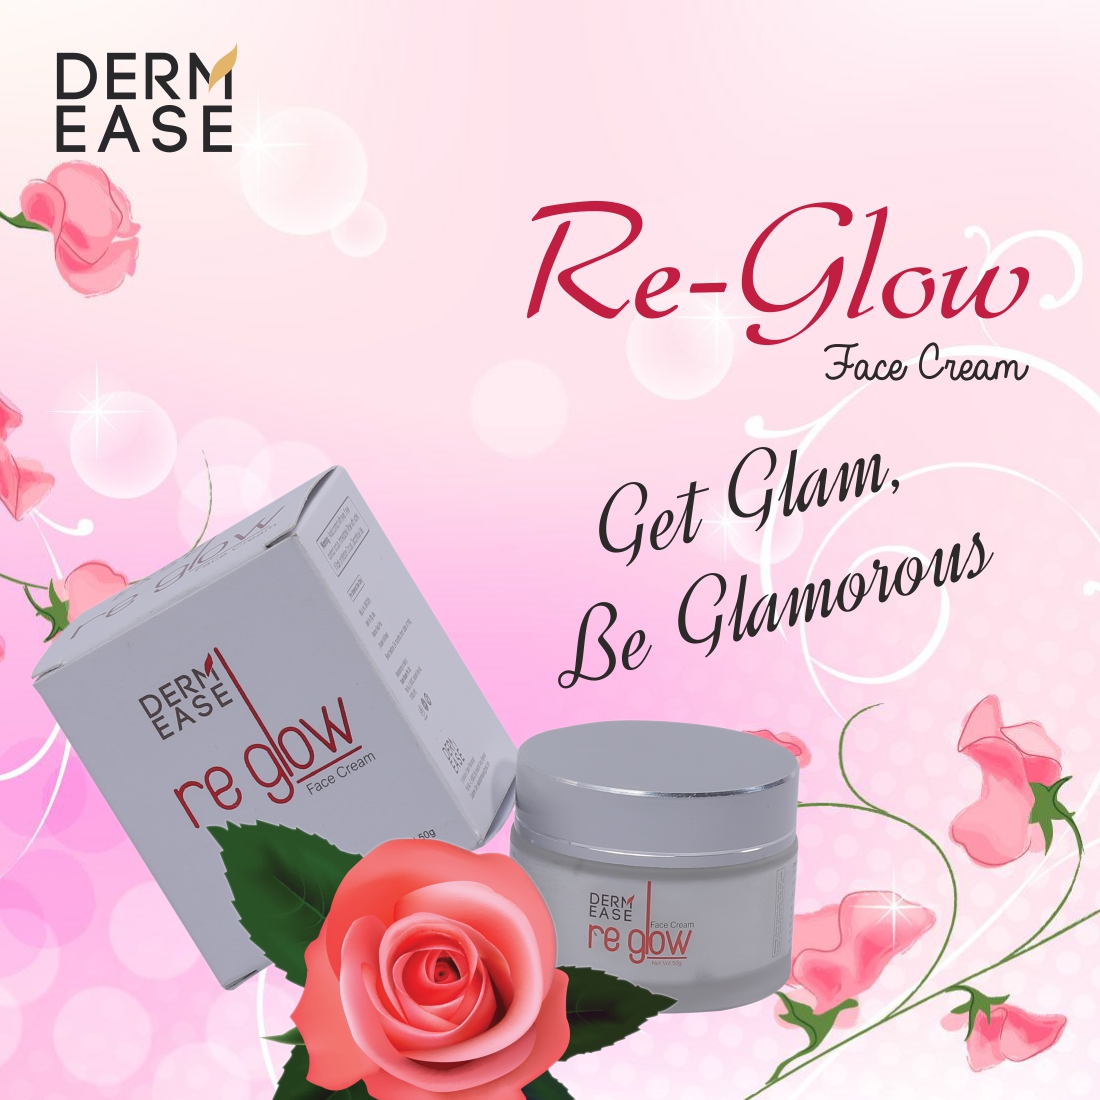 DERM EASE Re Glow Face Cream